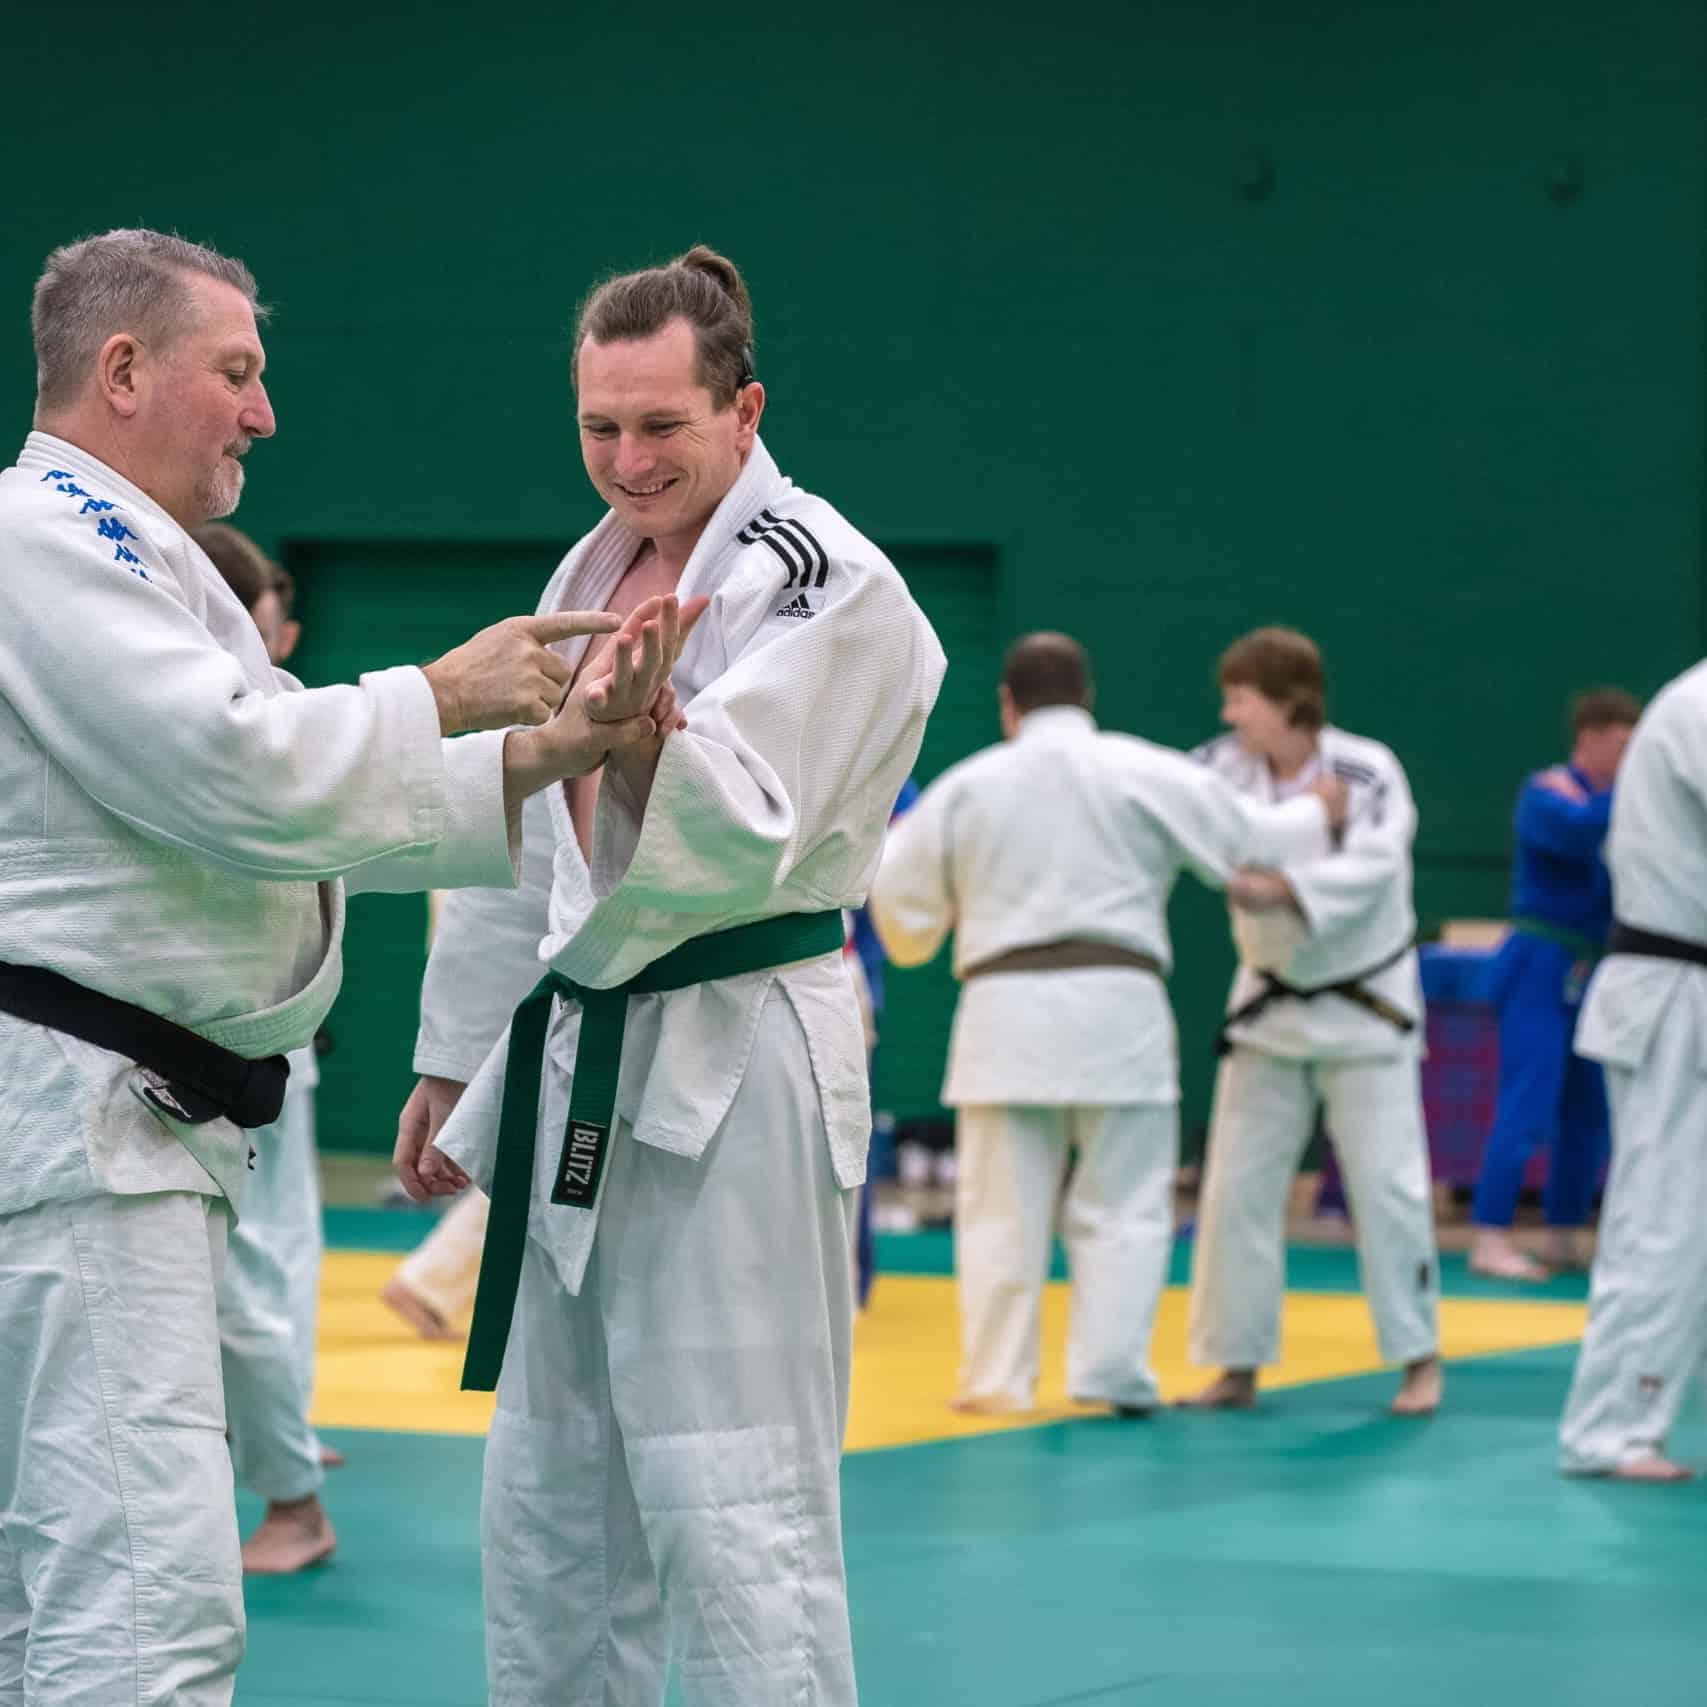 Judoka Chris Nicol with club coach Charlie Strachan communicating through tactile sign language on a judo mat.